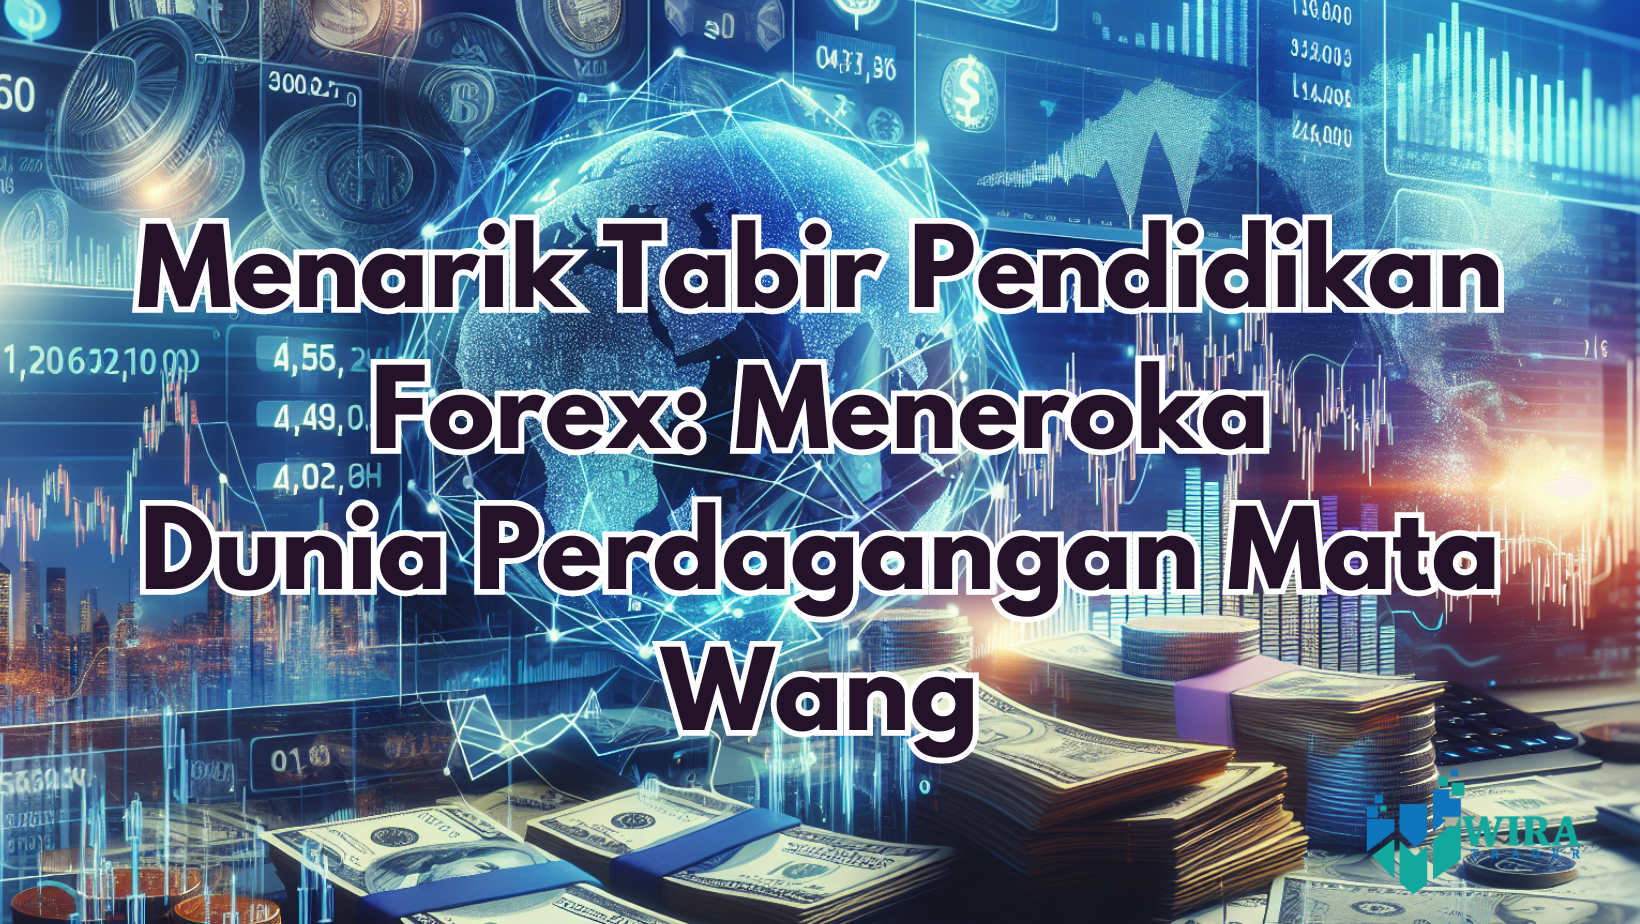 You are currently viewing Menarik Tabir Pendidikan Forex: Meneroka Dunia Perdagangan Mata Wang